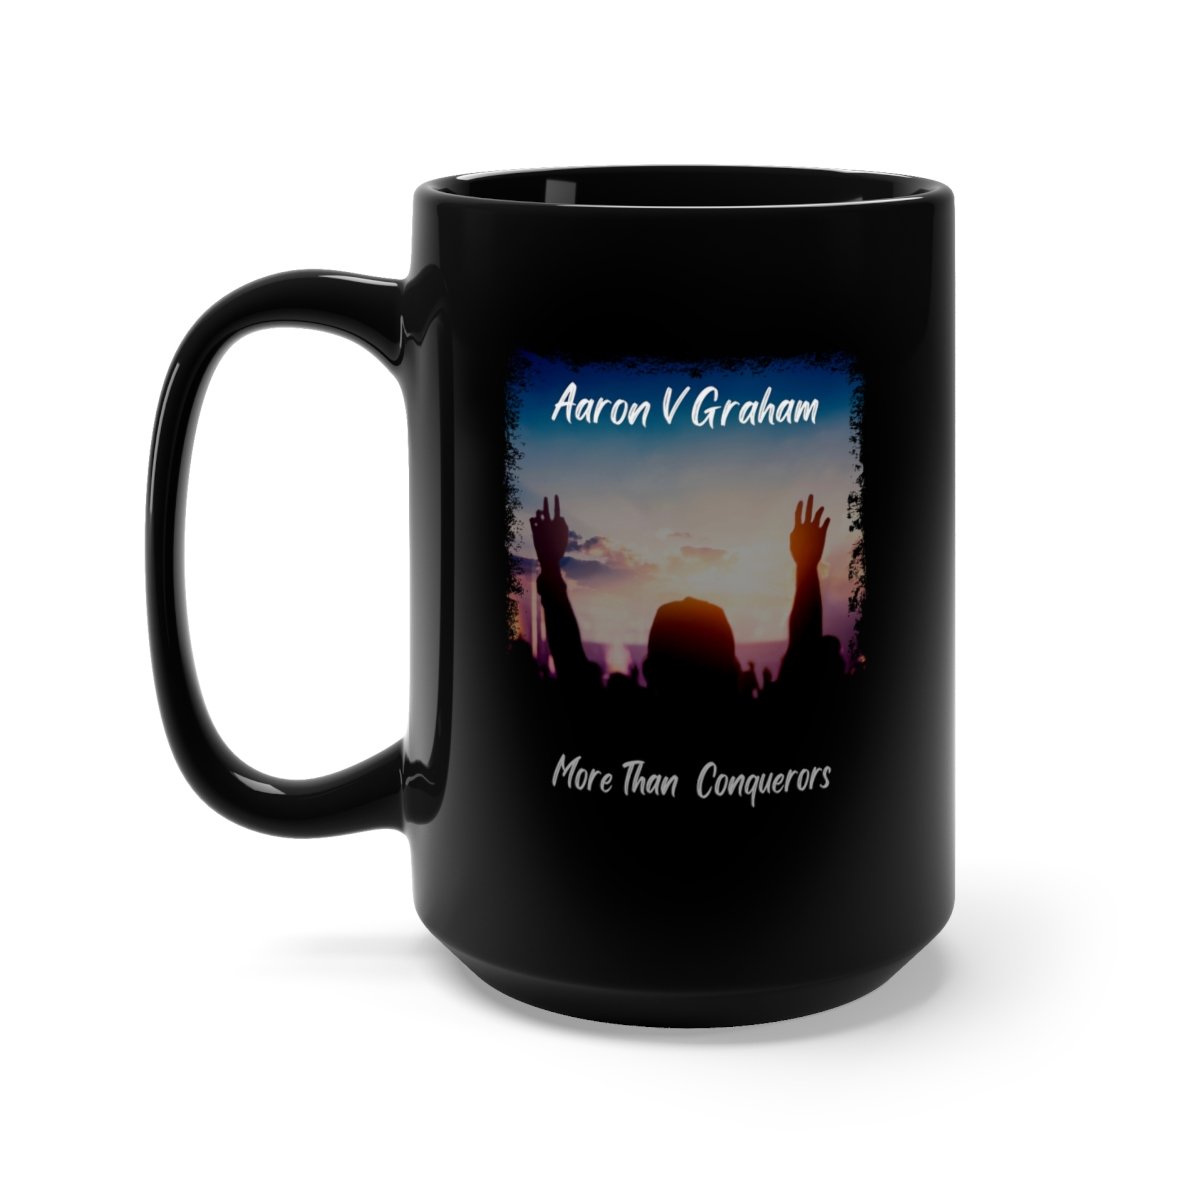 Aaron V Graham – More Than Conquerors 15oz Black Mug